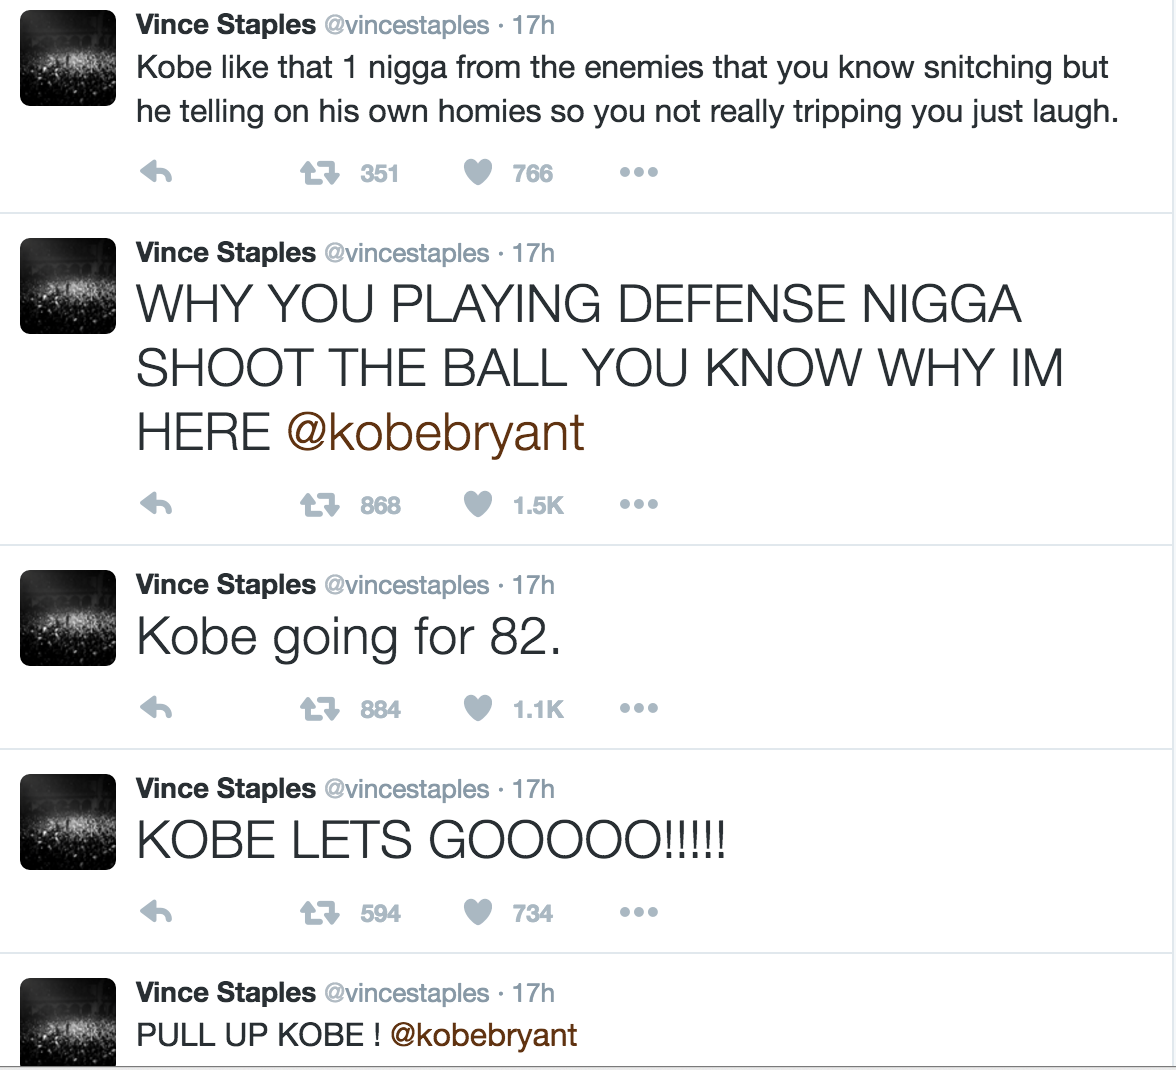 Vince Staples Kobe Bryant